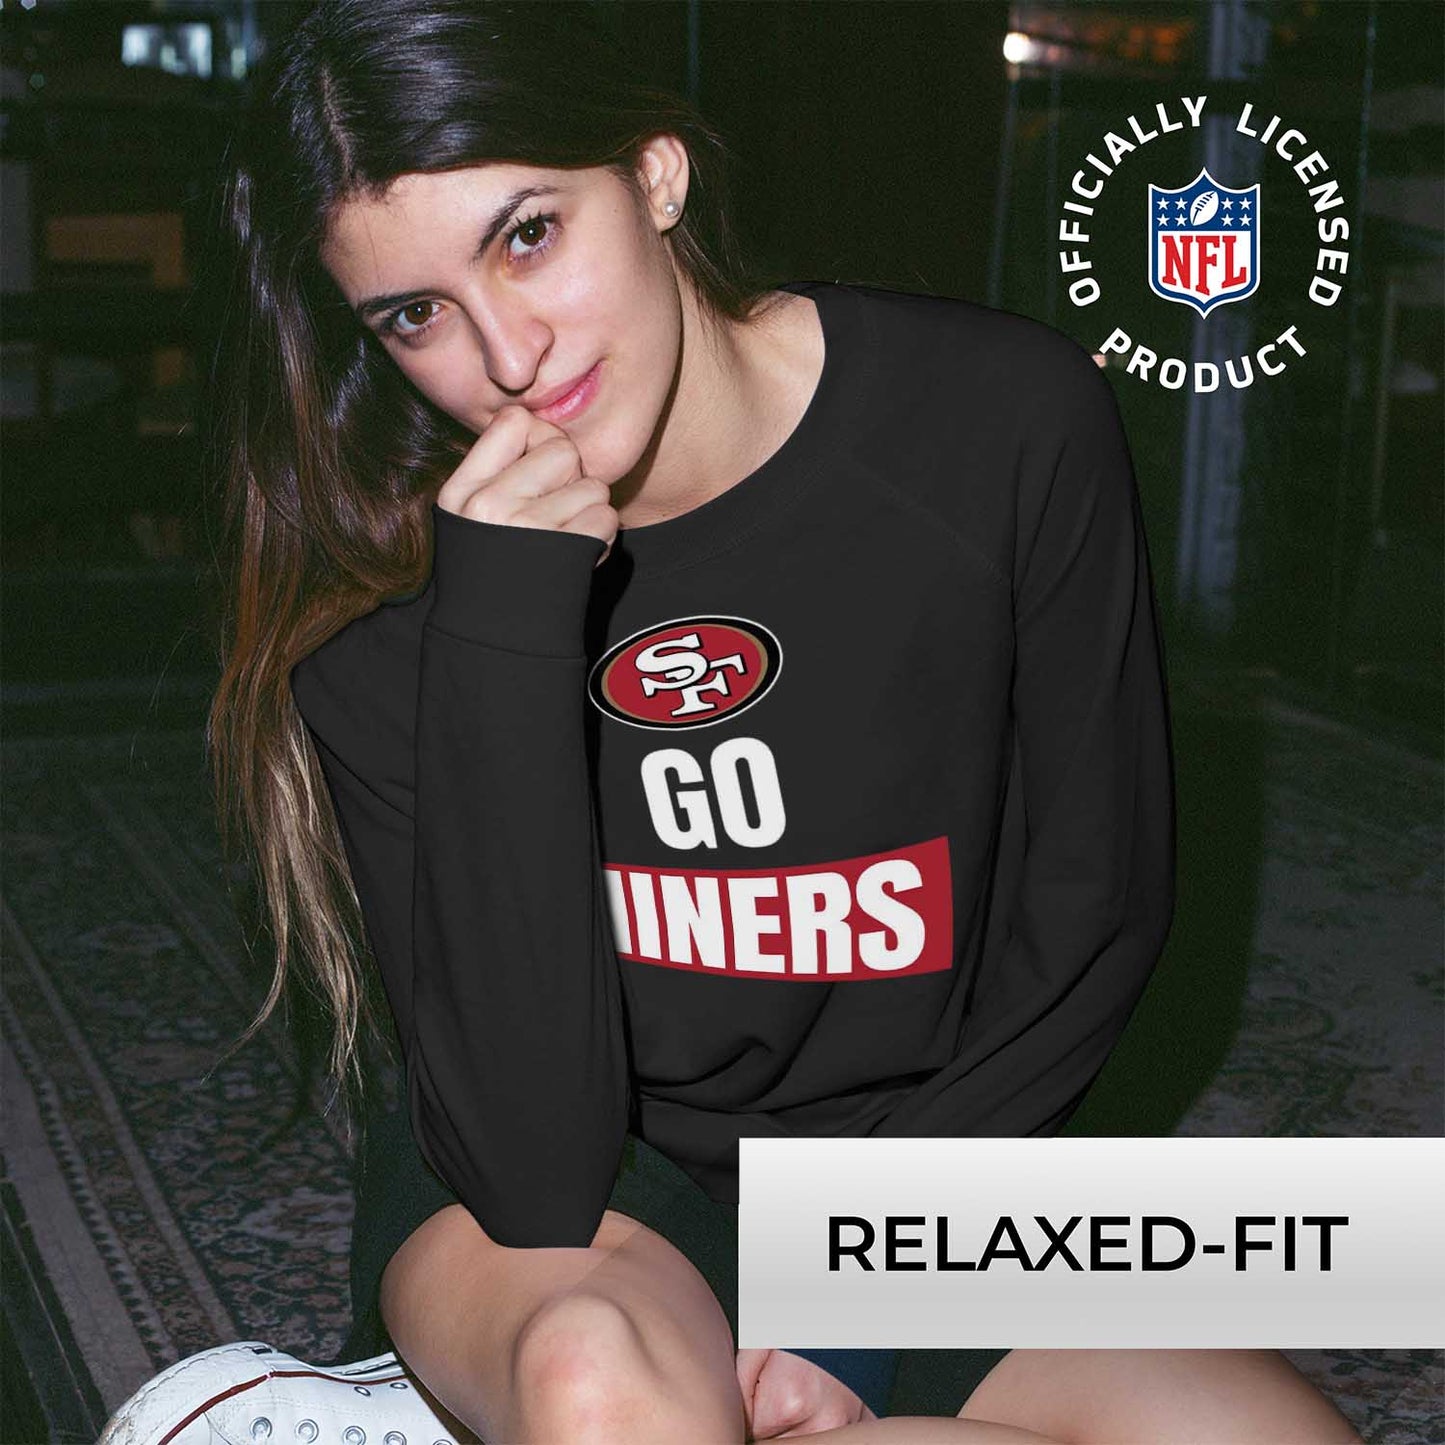 San Francisco 49ers NFL Womens Plus Size Team Slogan Crew Neck - Black